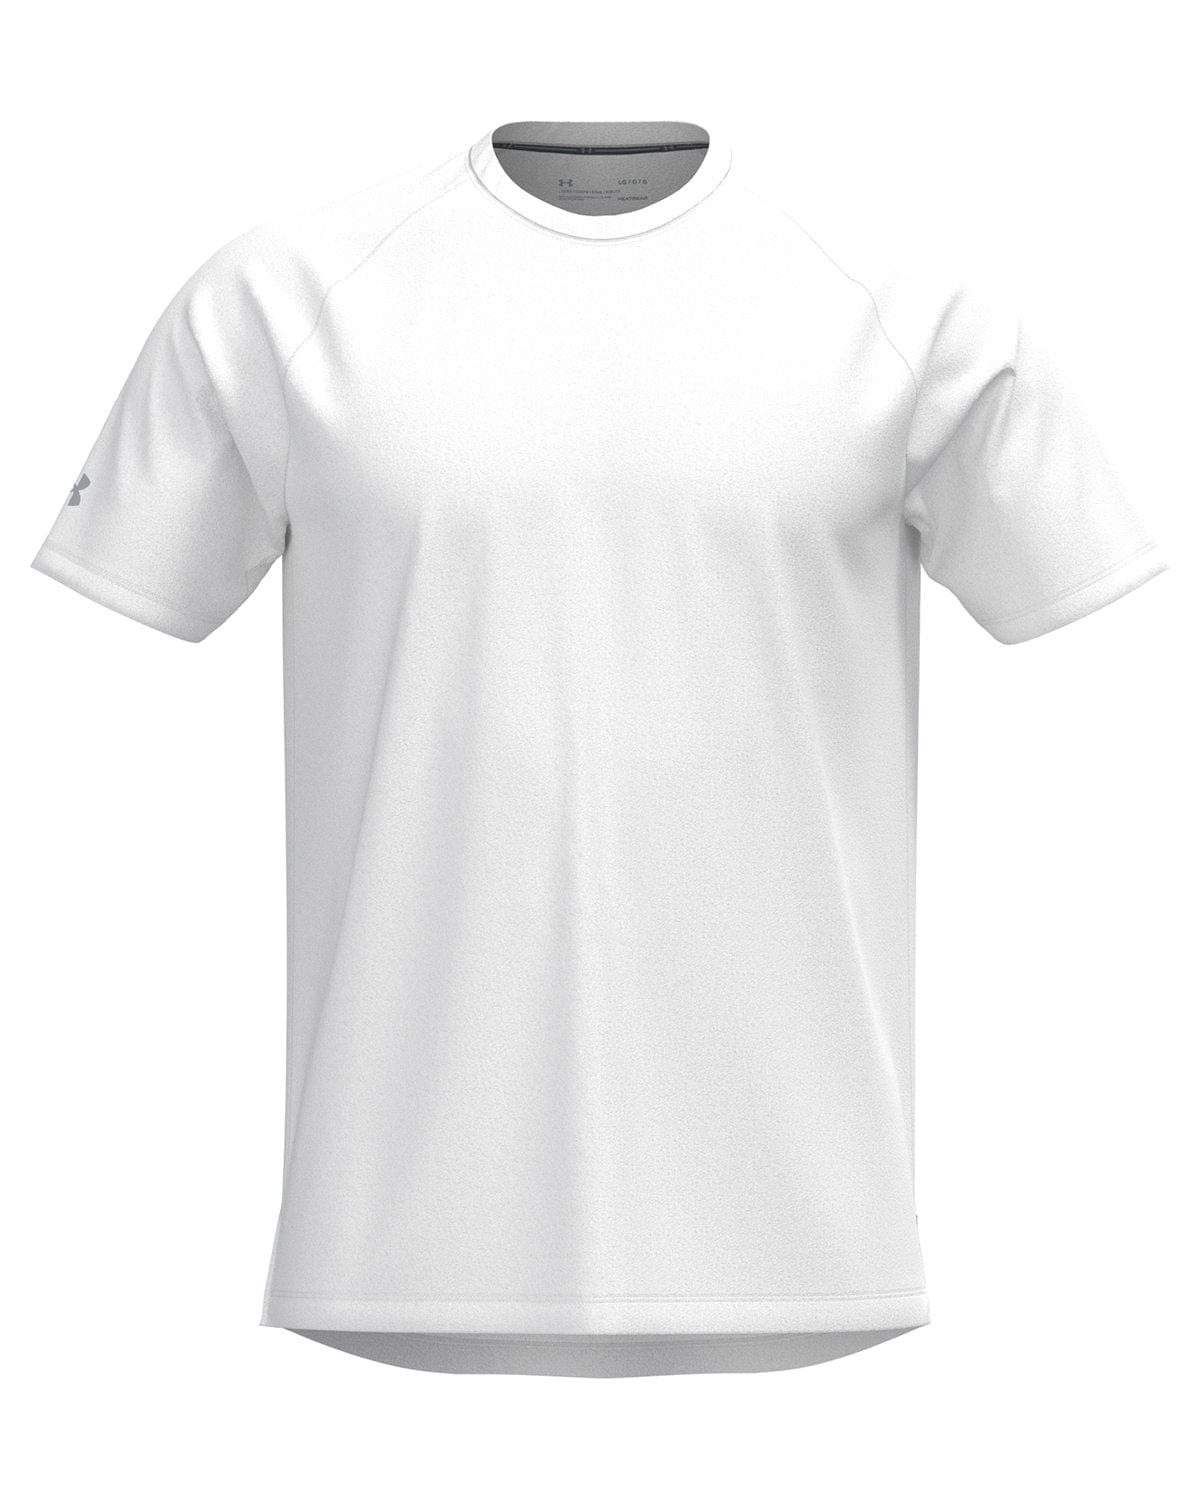 Under Armour T-shirts S / White/Black Under Armour - Men's Athletic Raglan T-Shirt 2.0